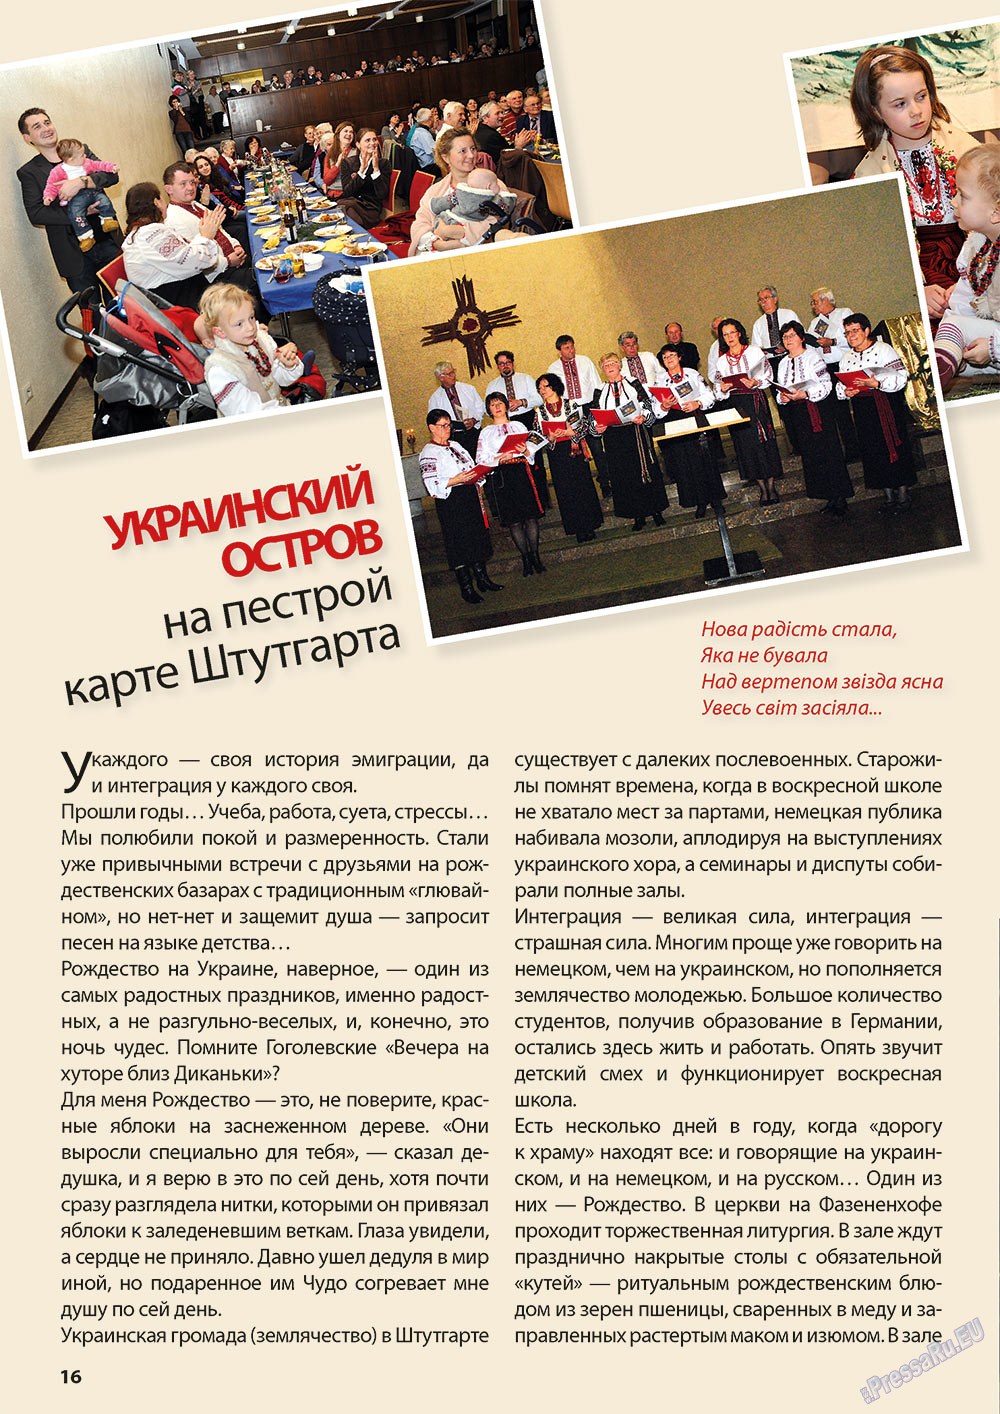 Wadim, журнал. 2013 №1 стр.16